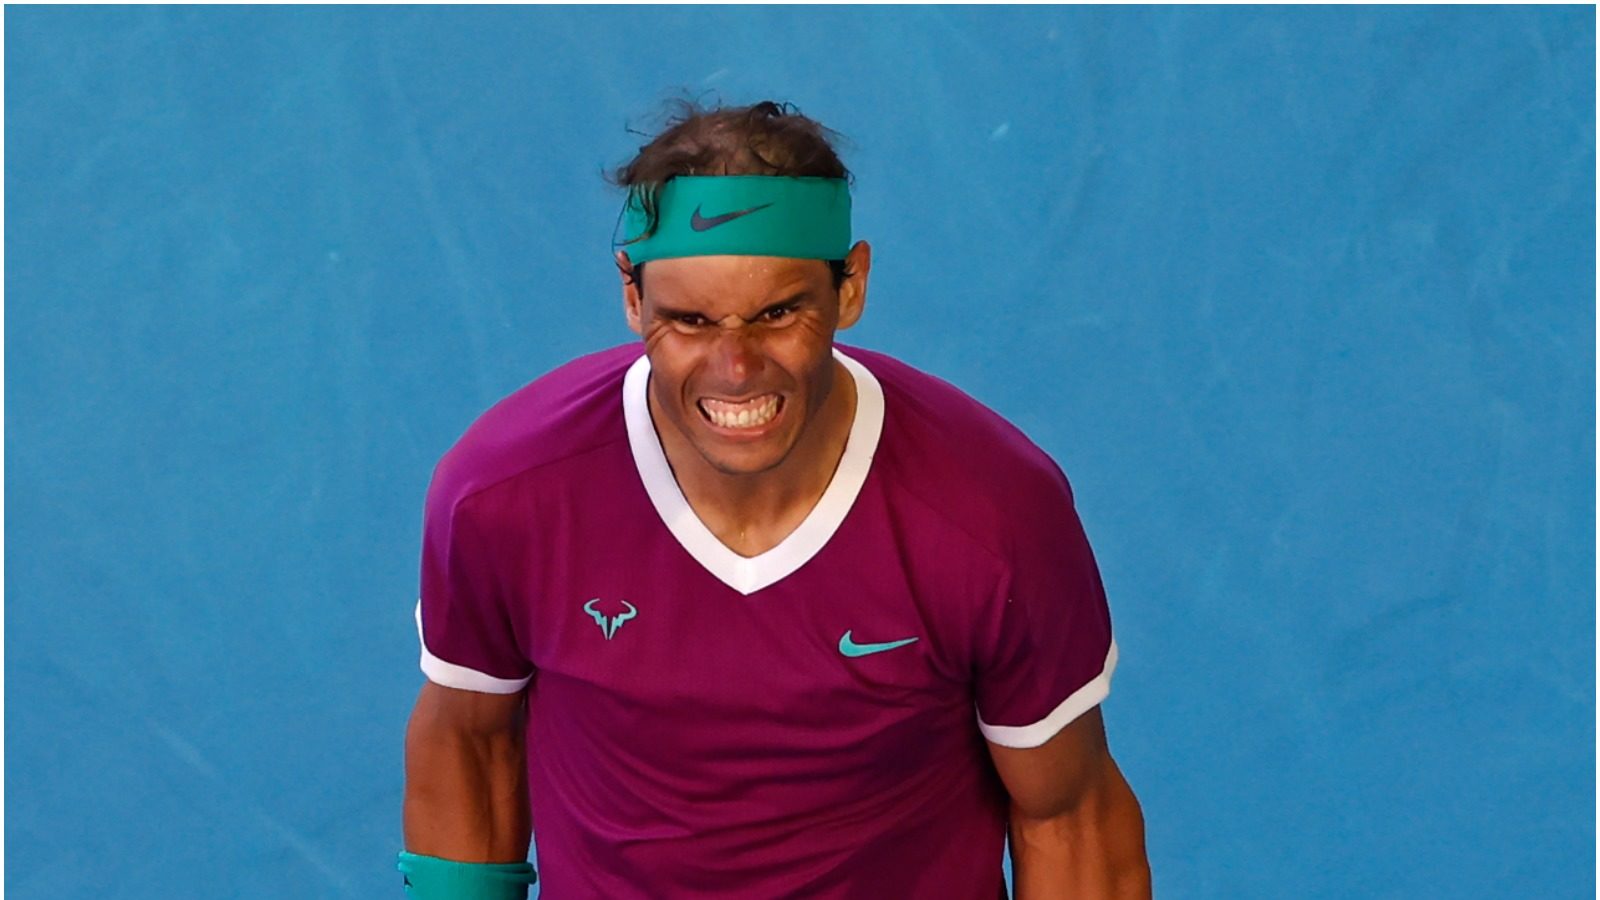 AUS Open Final: Rafael Nadal makes history by winning 21st Grand Slam title, beating Djokovic-Federer